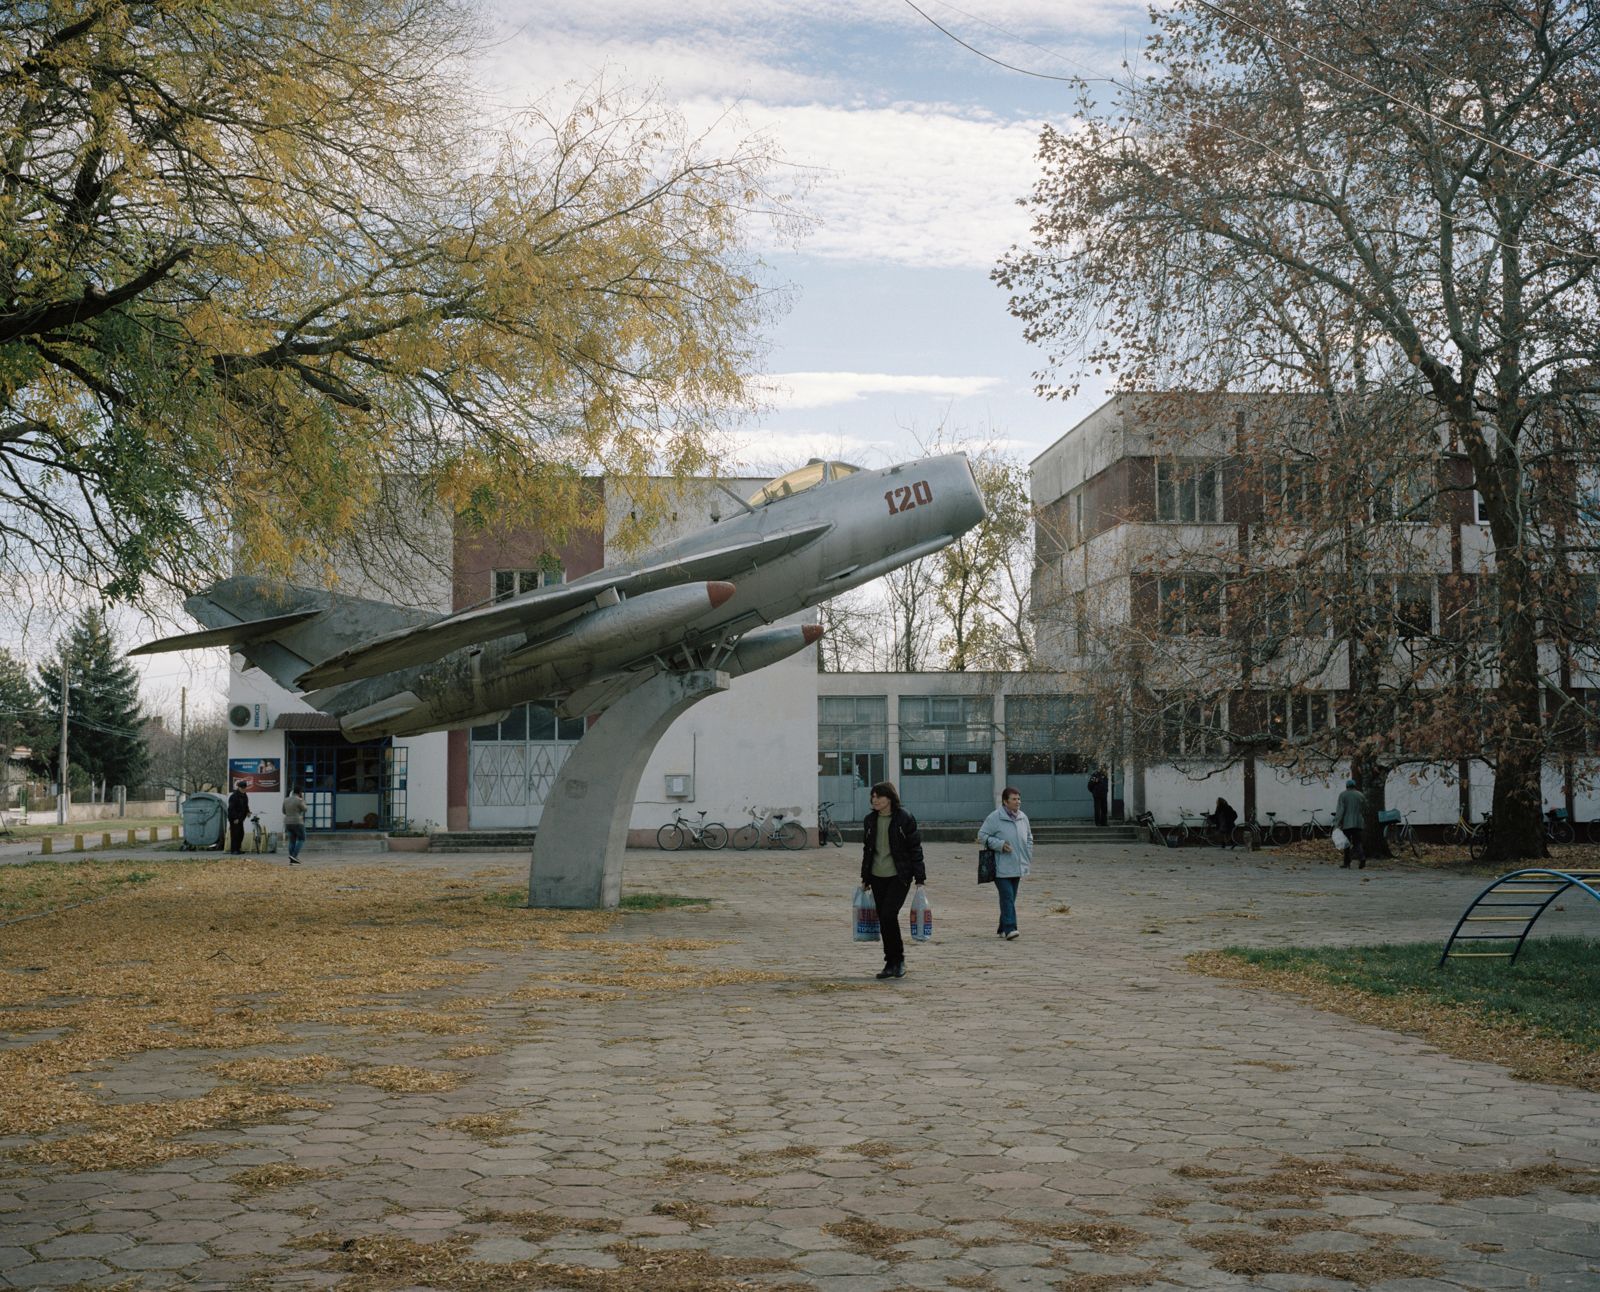 © Tommaso Rada - Bulgaria, Bardaski Geran. A MIG plane uses as a monument in the main square of a village